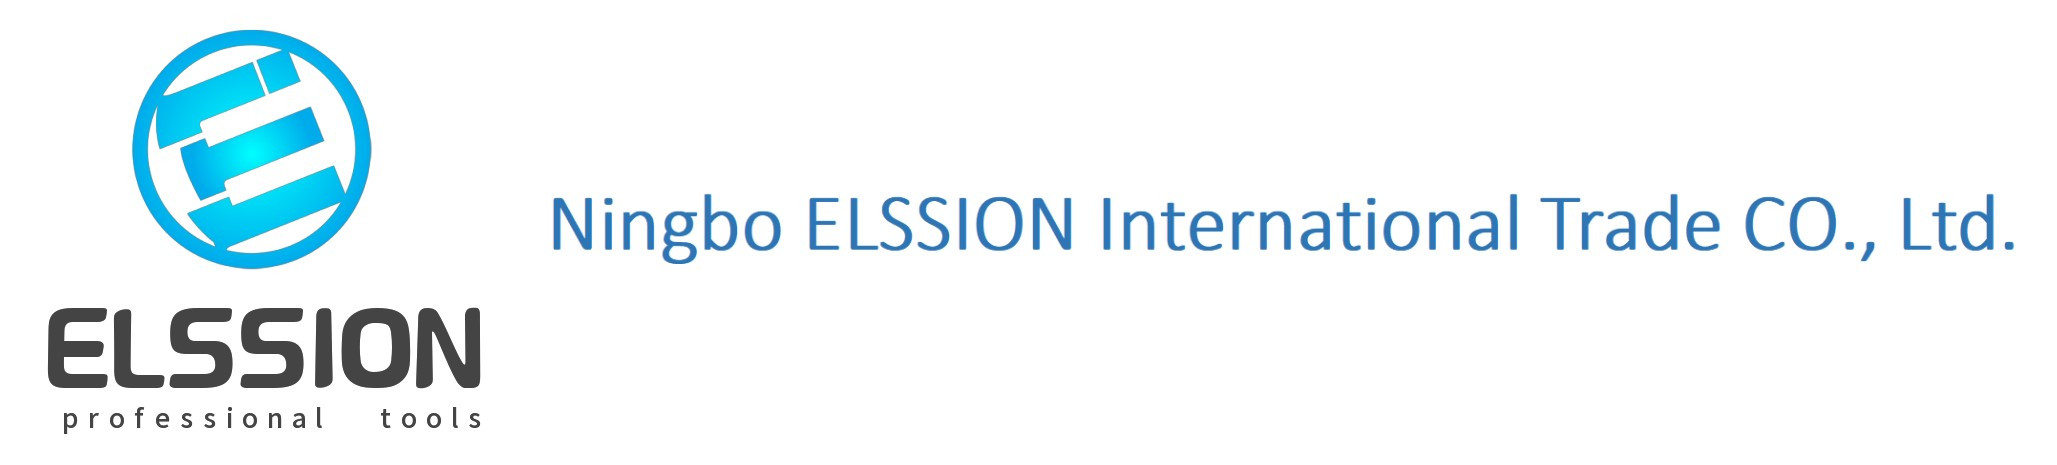 Ningbo Beilun Elssion International Trade Co., Ltd.